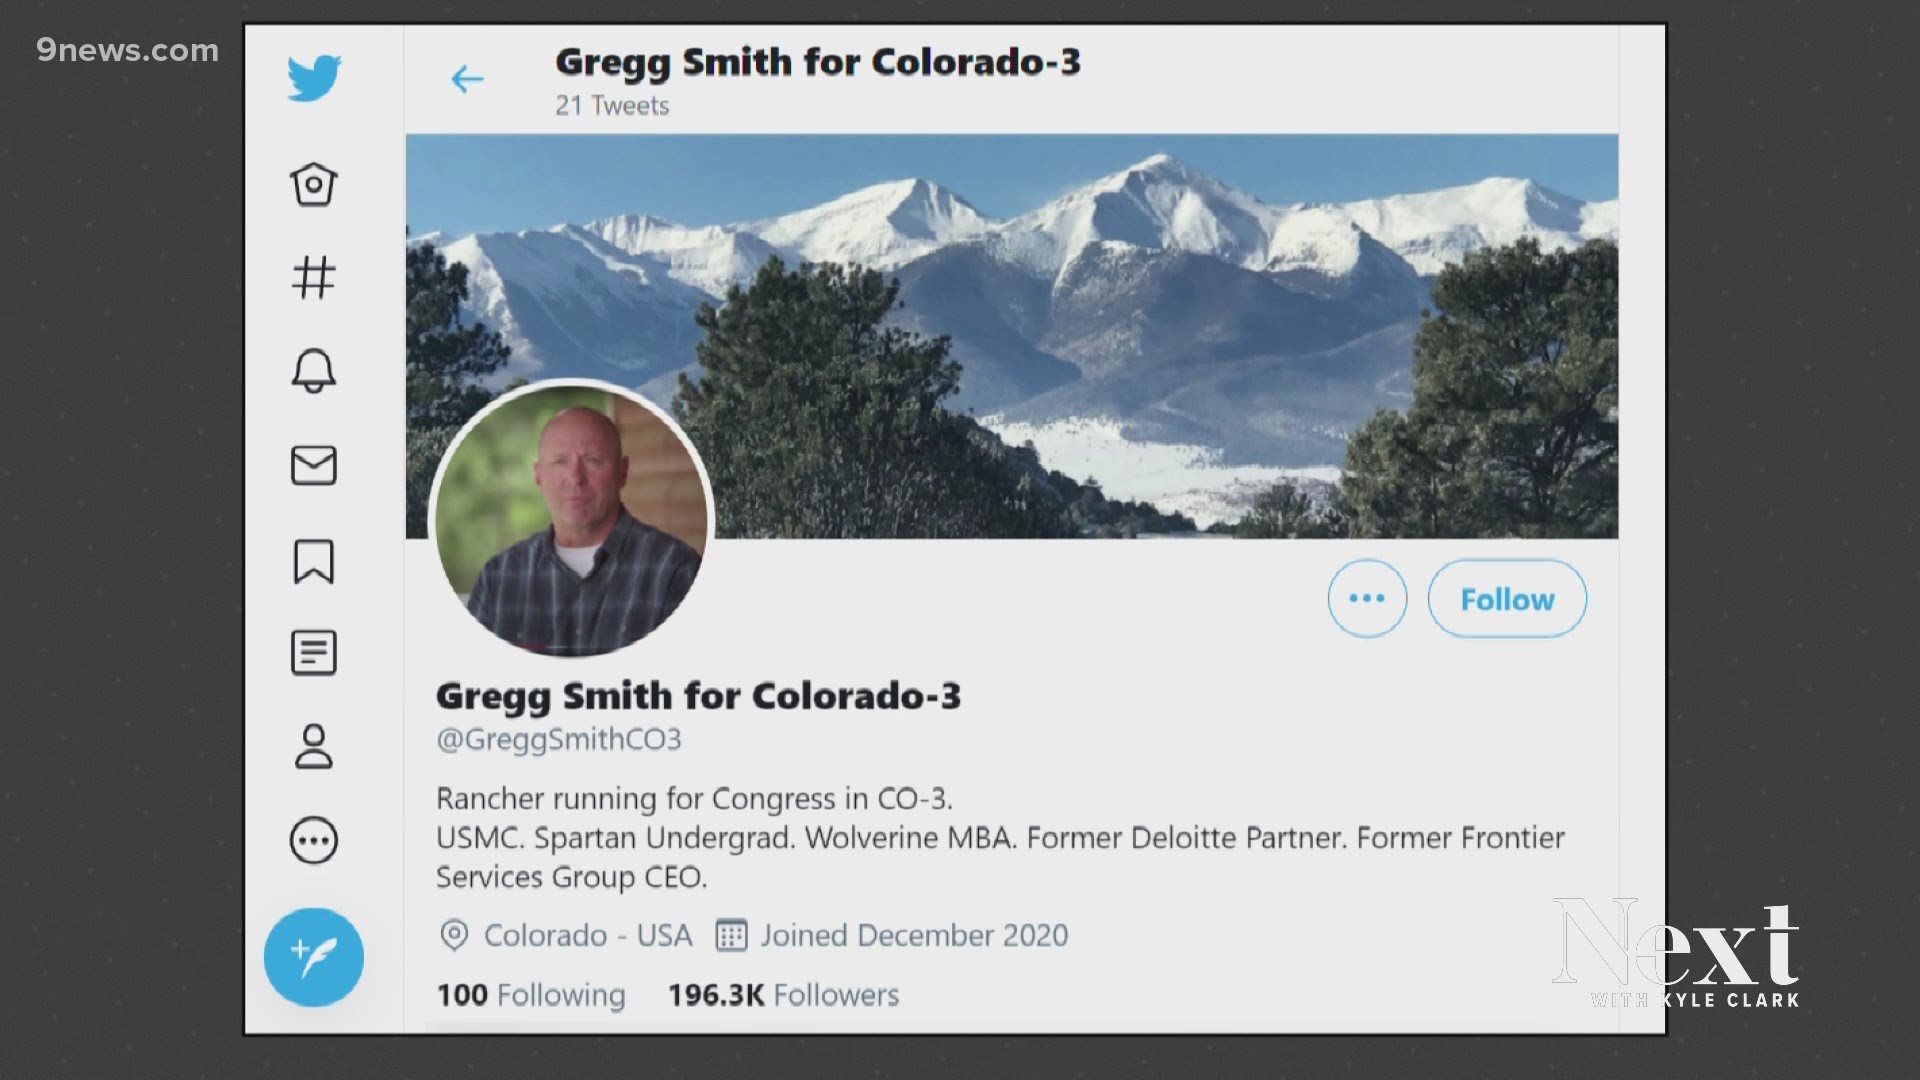 Gregg Smith is a real person ... but the Democratic establishment had no idea who he is.